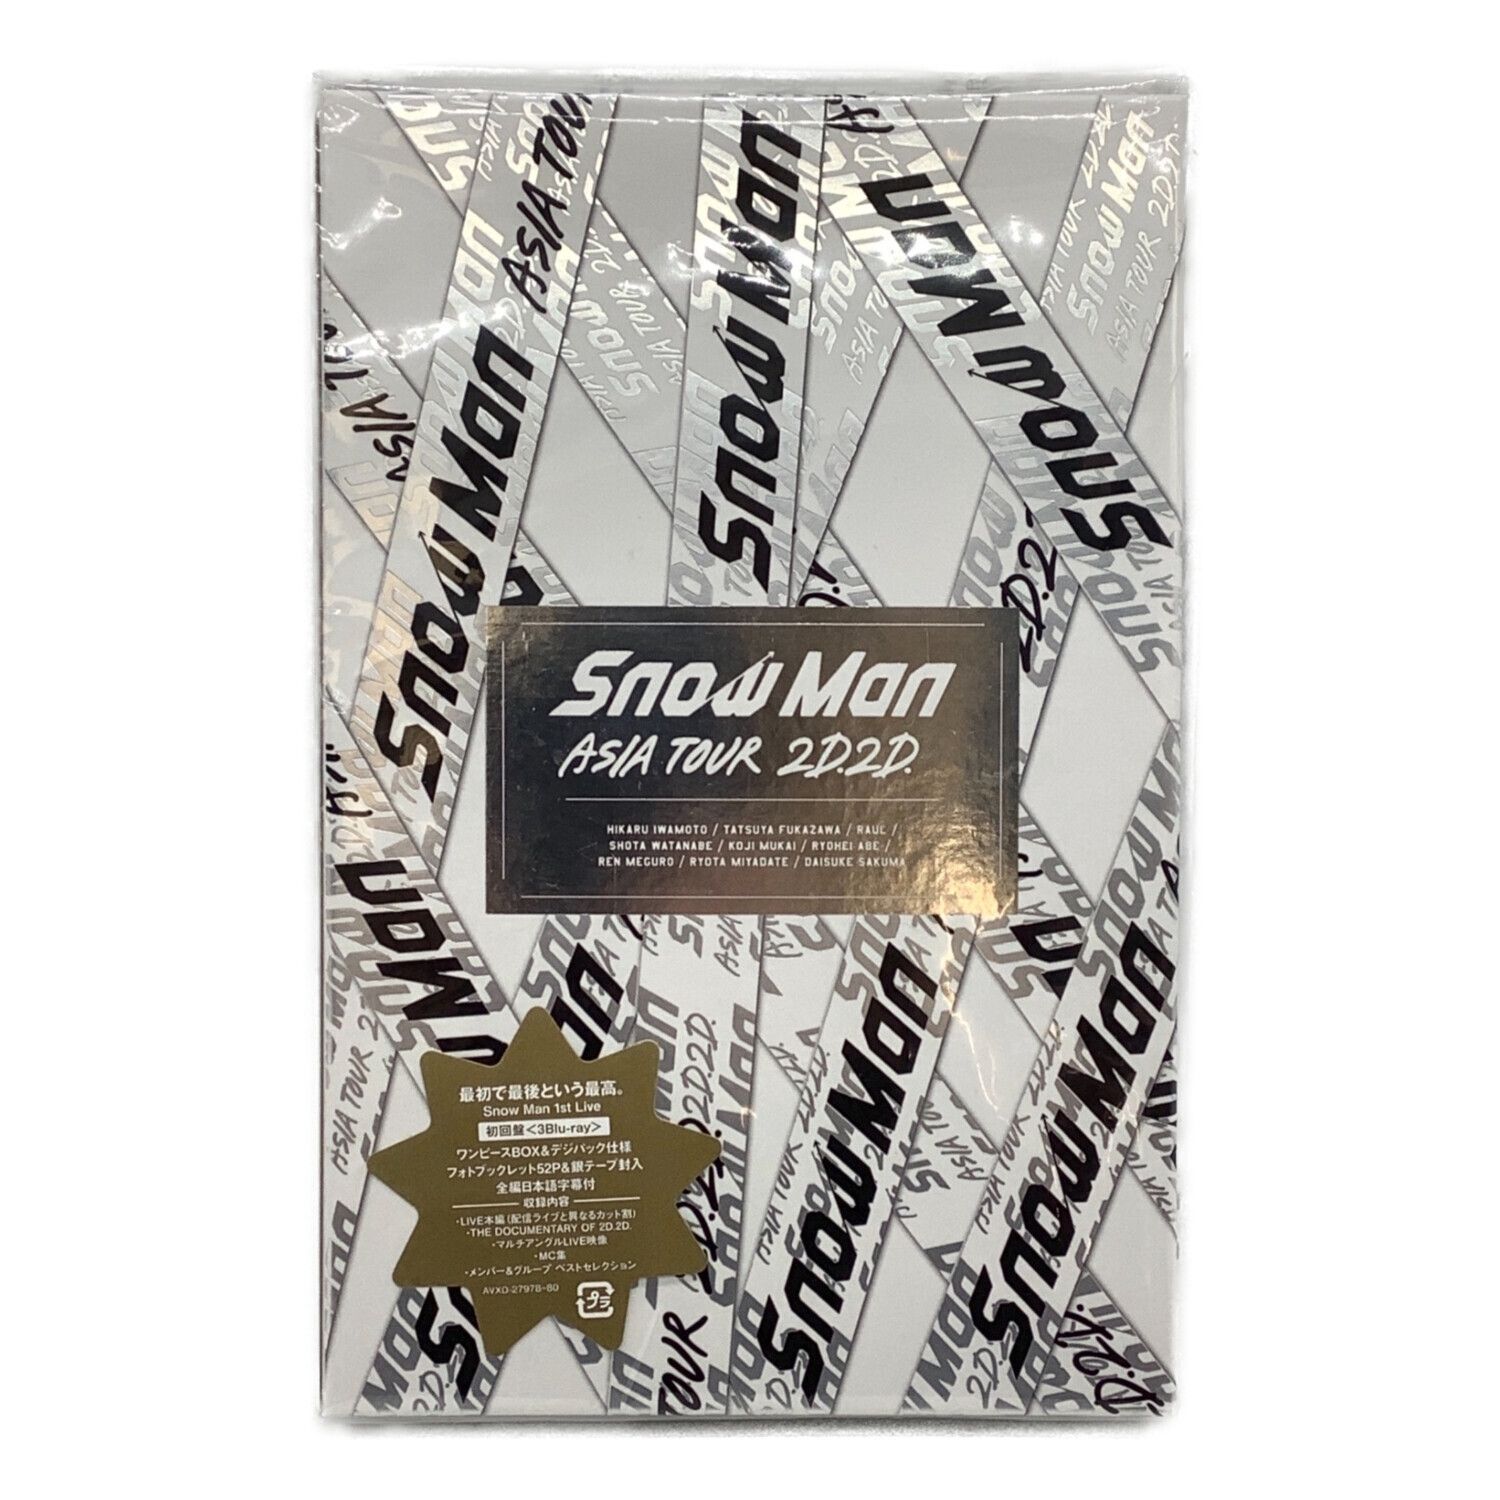 SNOW MAN (スノーマン) DVD Snow Man ASIA TOUR 2D.2D. (Blu-ray3枚組